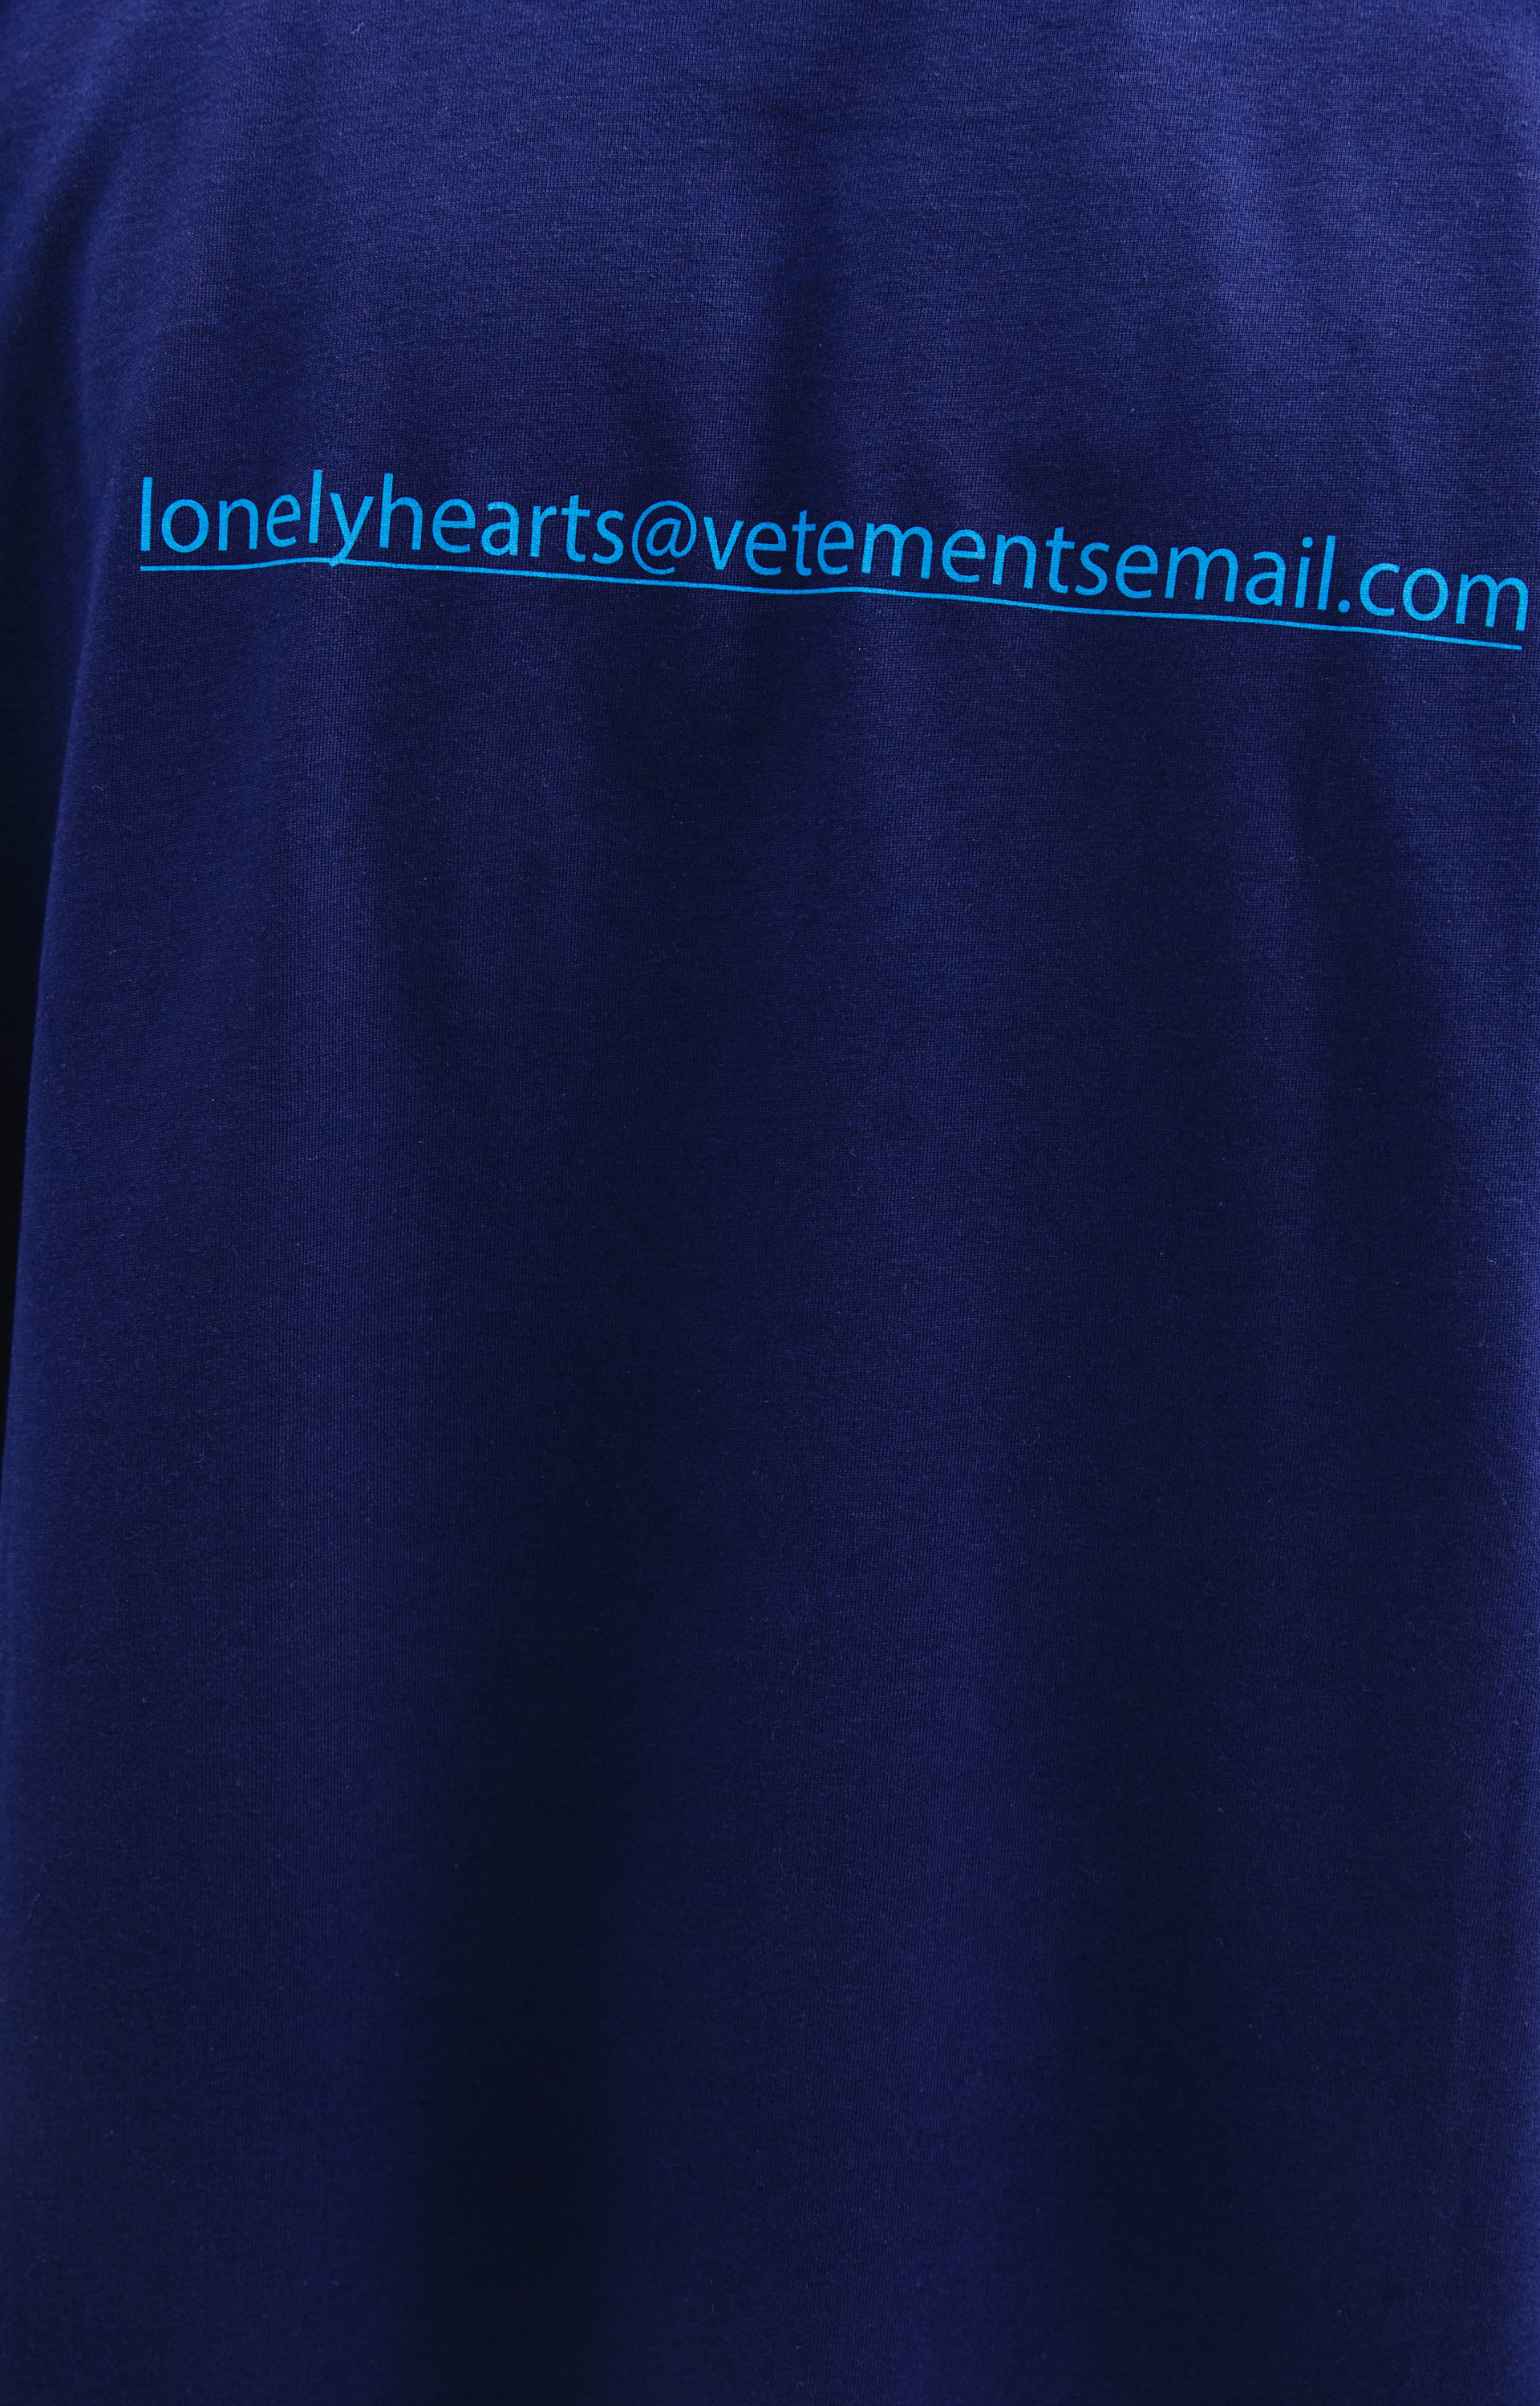 VETEMENTS Single Mingle navy printed t-shirt